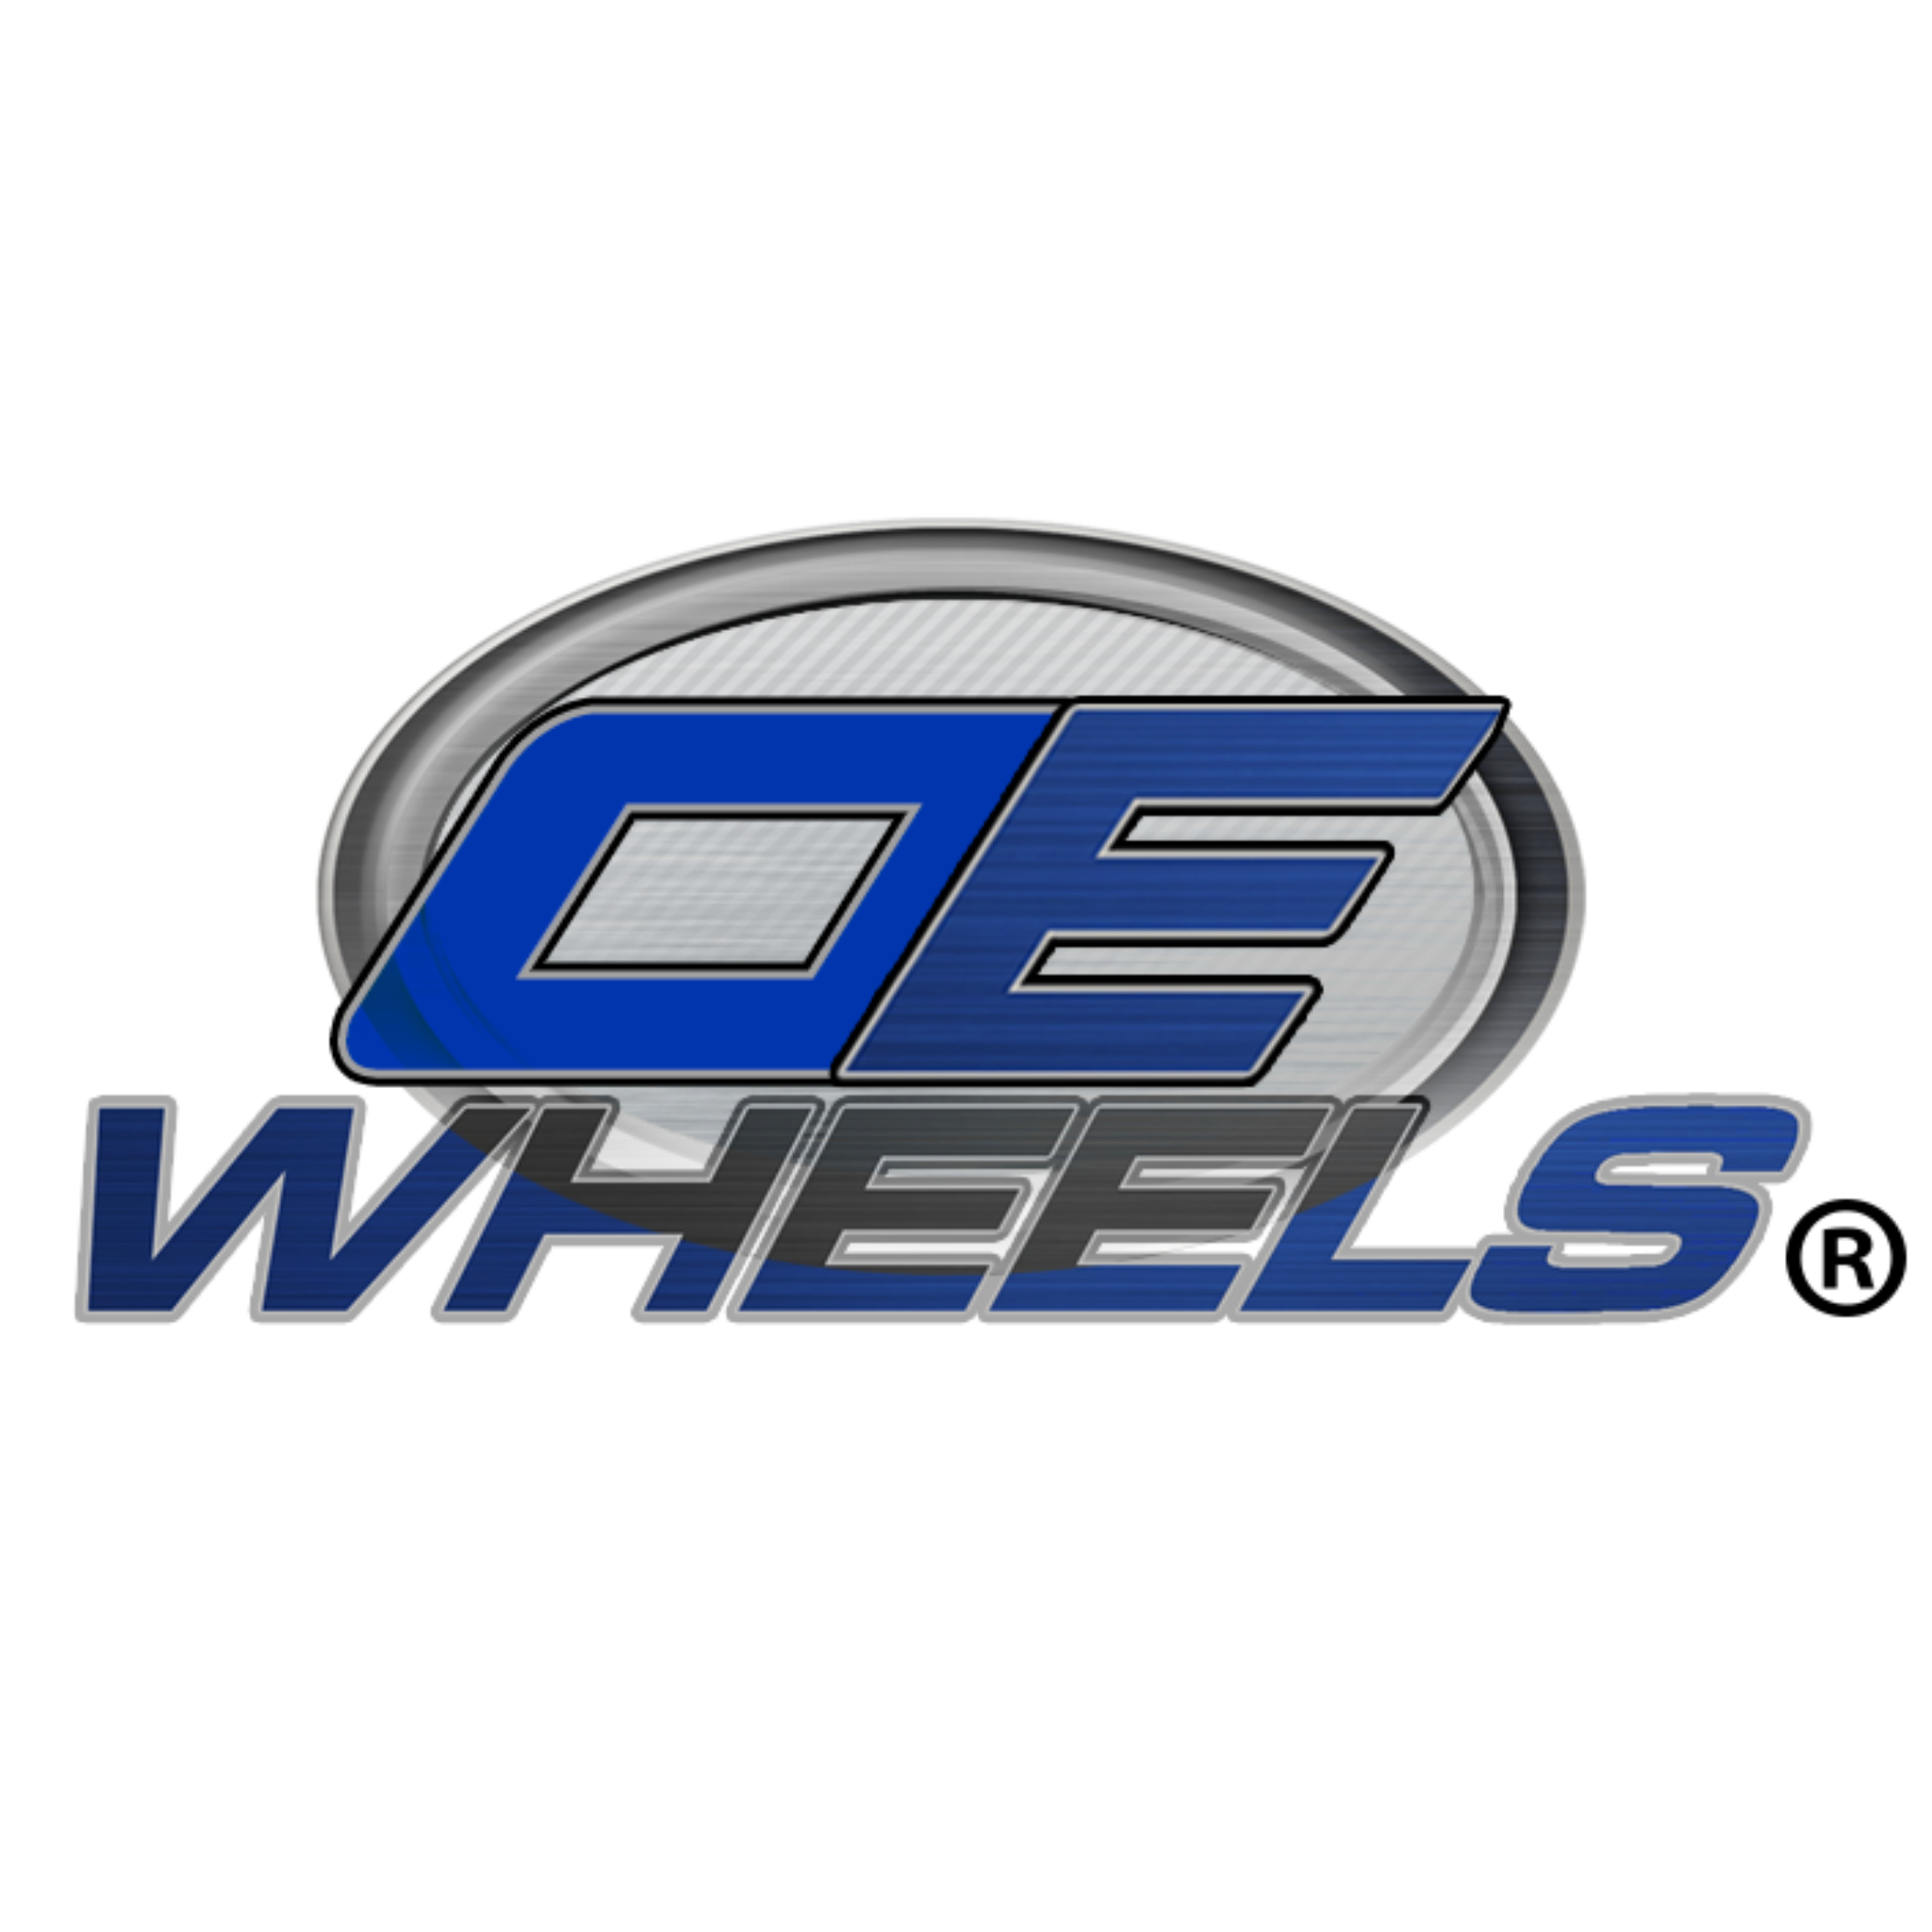 OE Wheels - Sarasota, FL 34243 - (866)273-3651 | ShowMeLocal.com